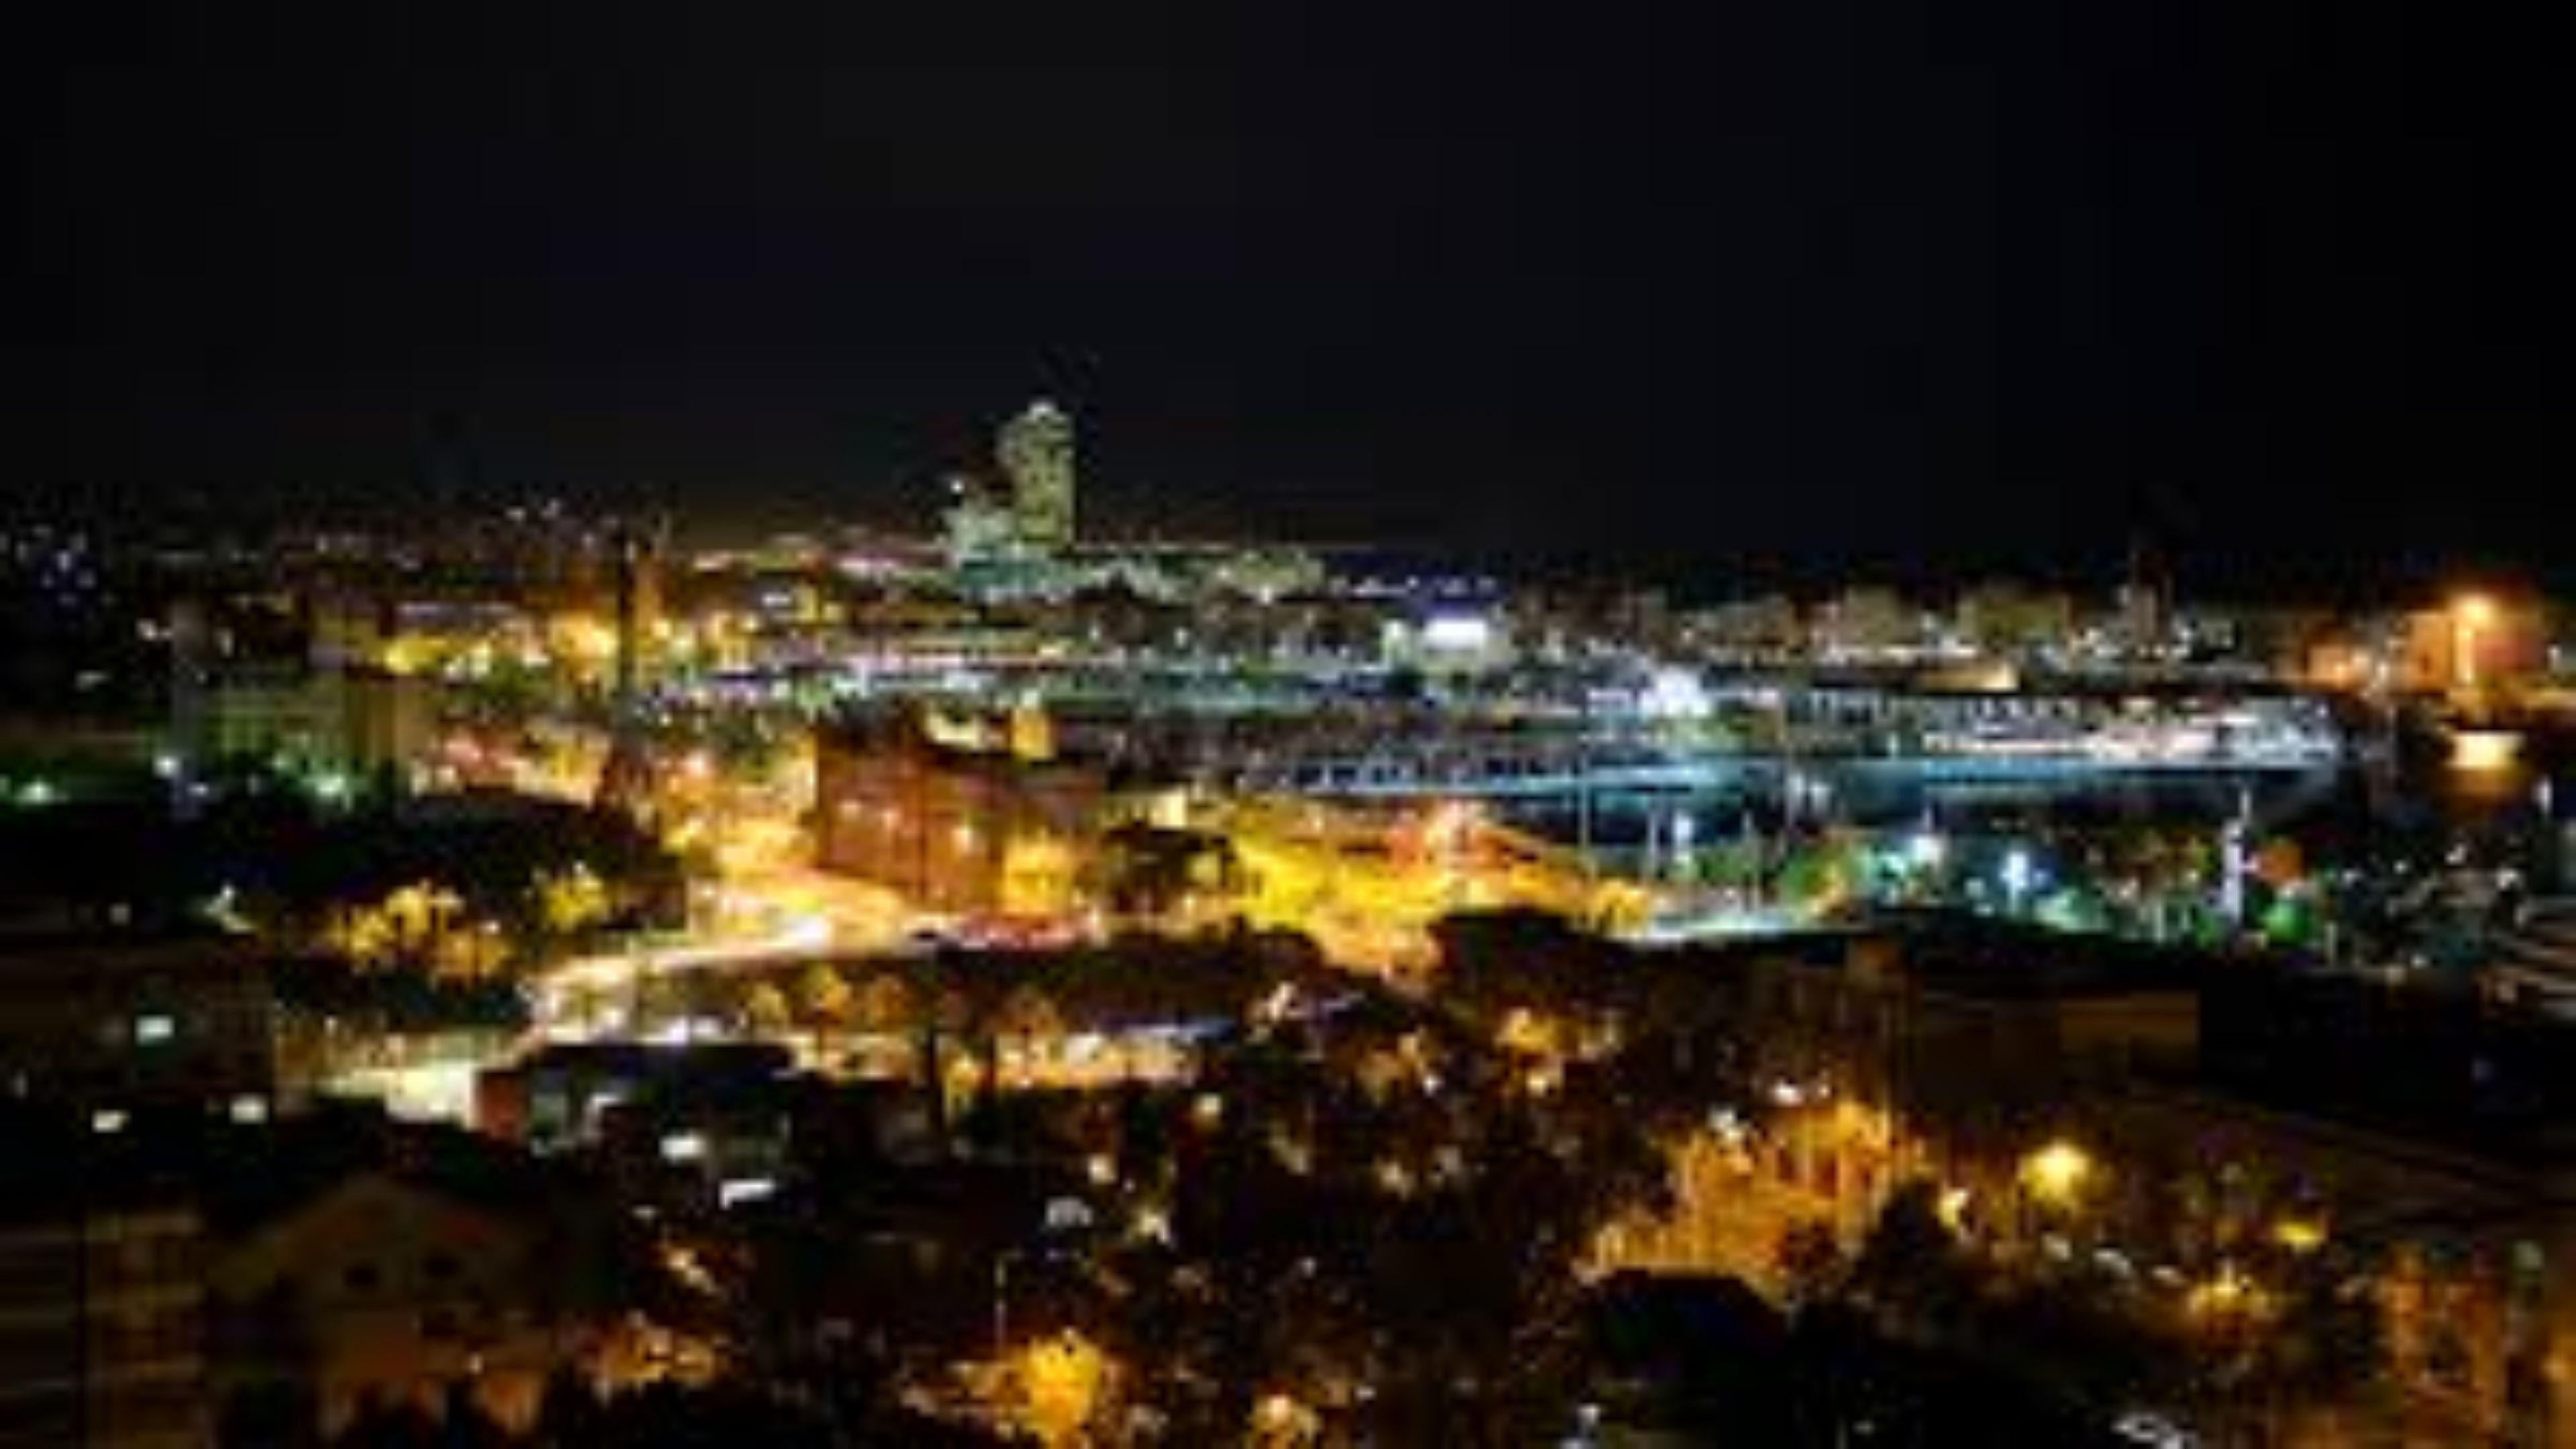 Nighttime 2016 Barcelona, Spain 4K Wallpapers